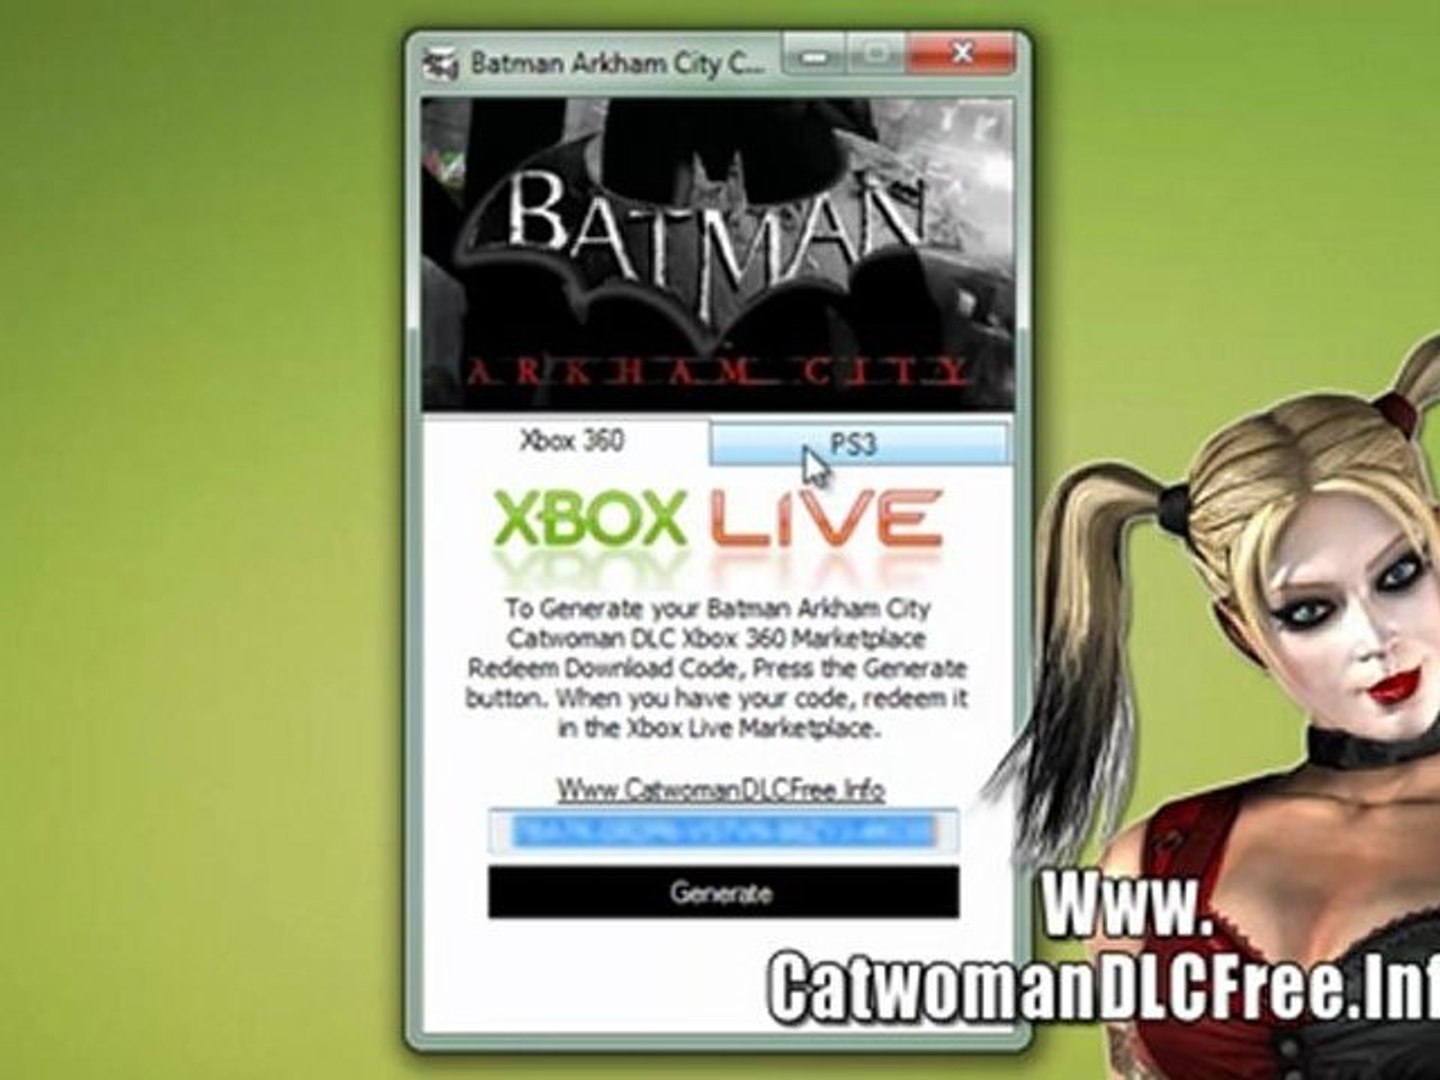 fascisme slim scheidsrechter Get Free Batman Arkham City Catwoman Pack DLC - Xbox 360 - PS3 - video  Dailymotion